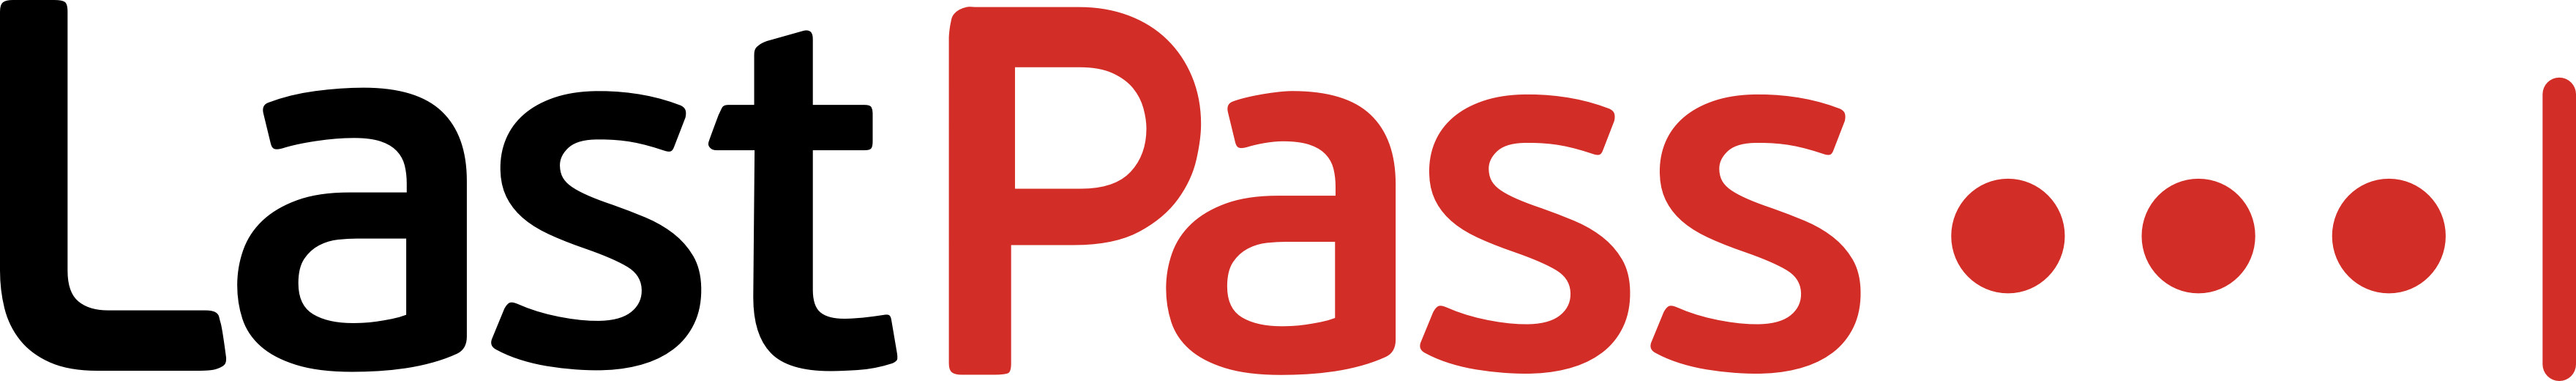 LastPass-Logo-Color (1).jpeg